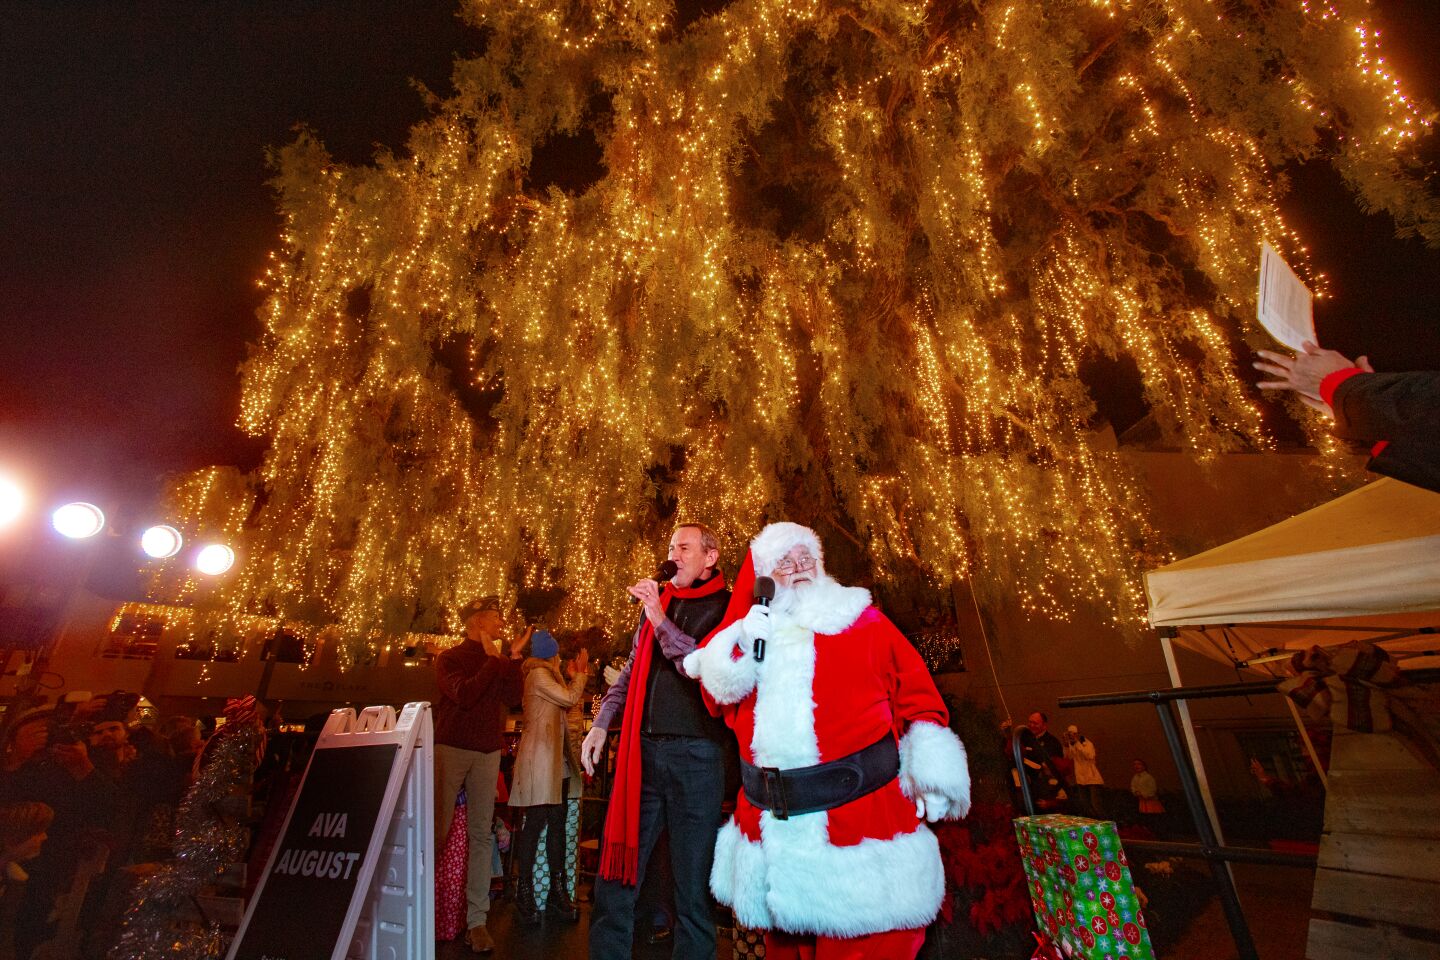 Laguna Beach Mayor Bob Whalen joins Santa in lighting the city's Christmas tree at Friday's Hospitality Night.